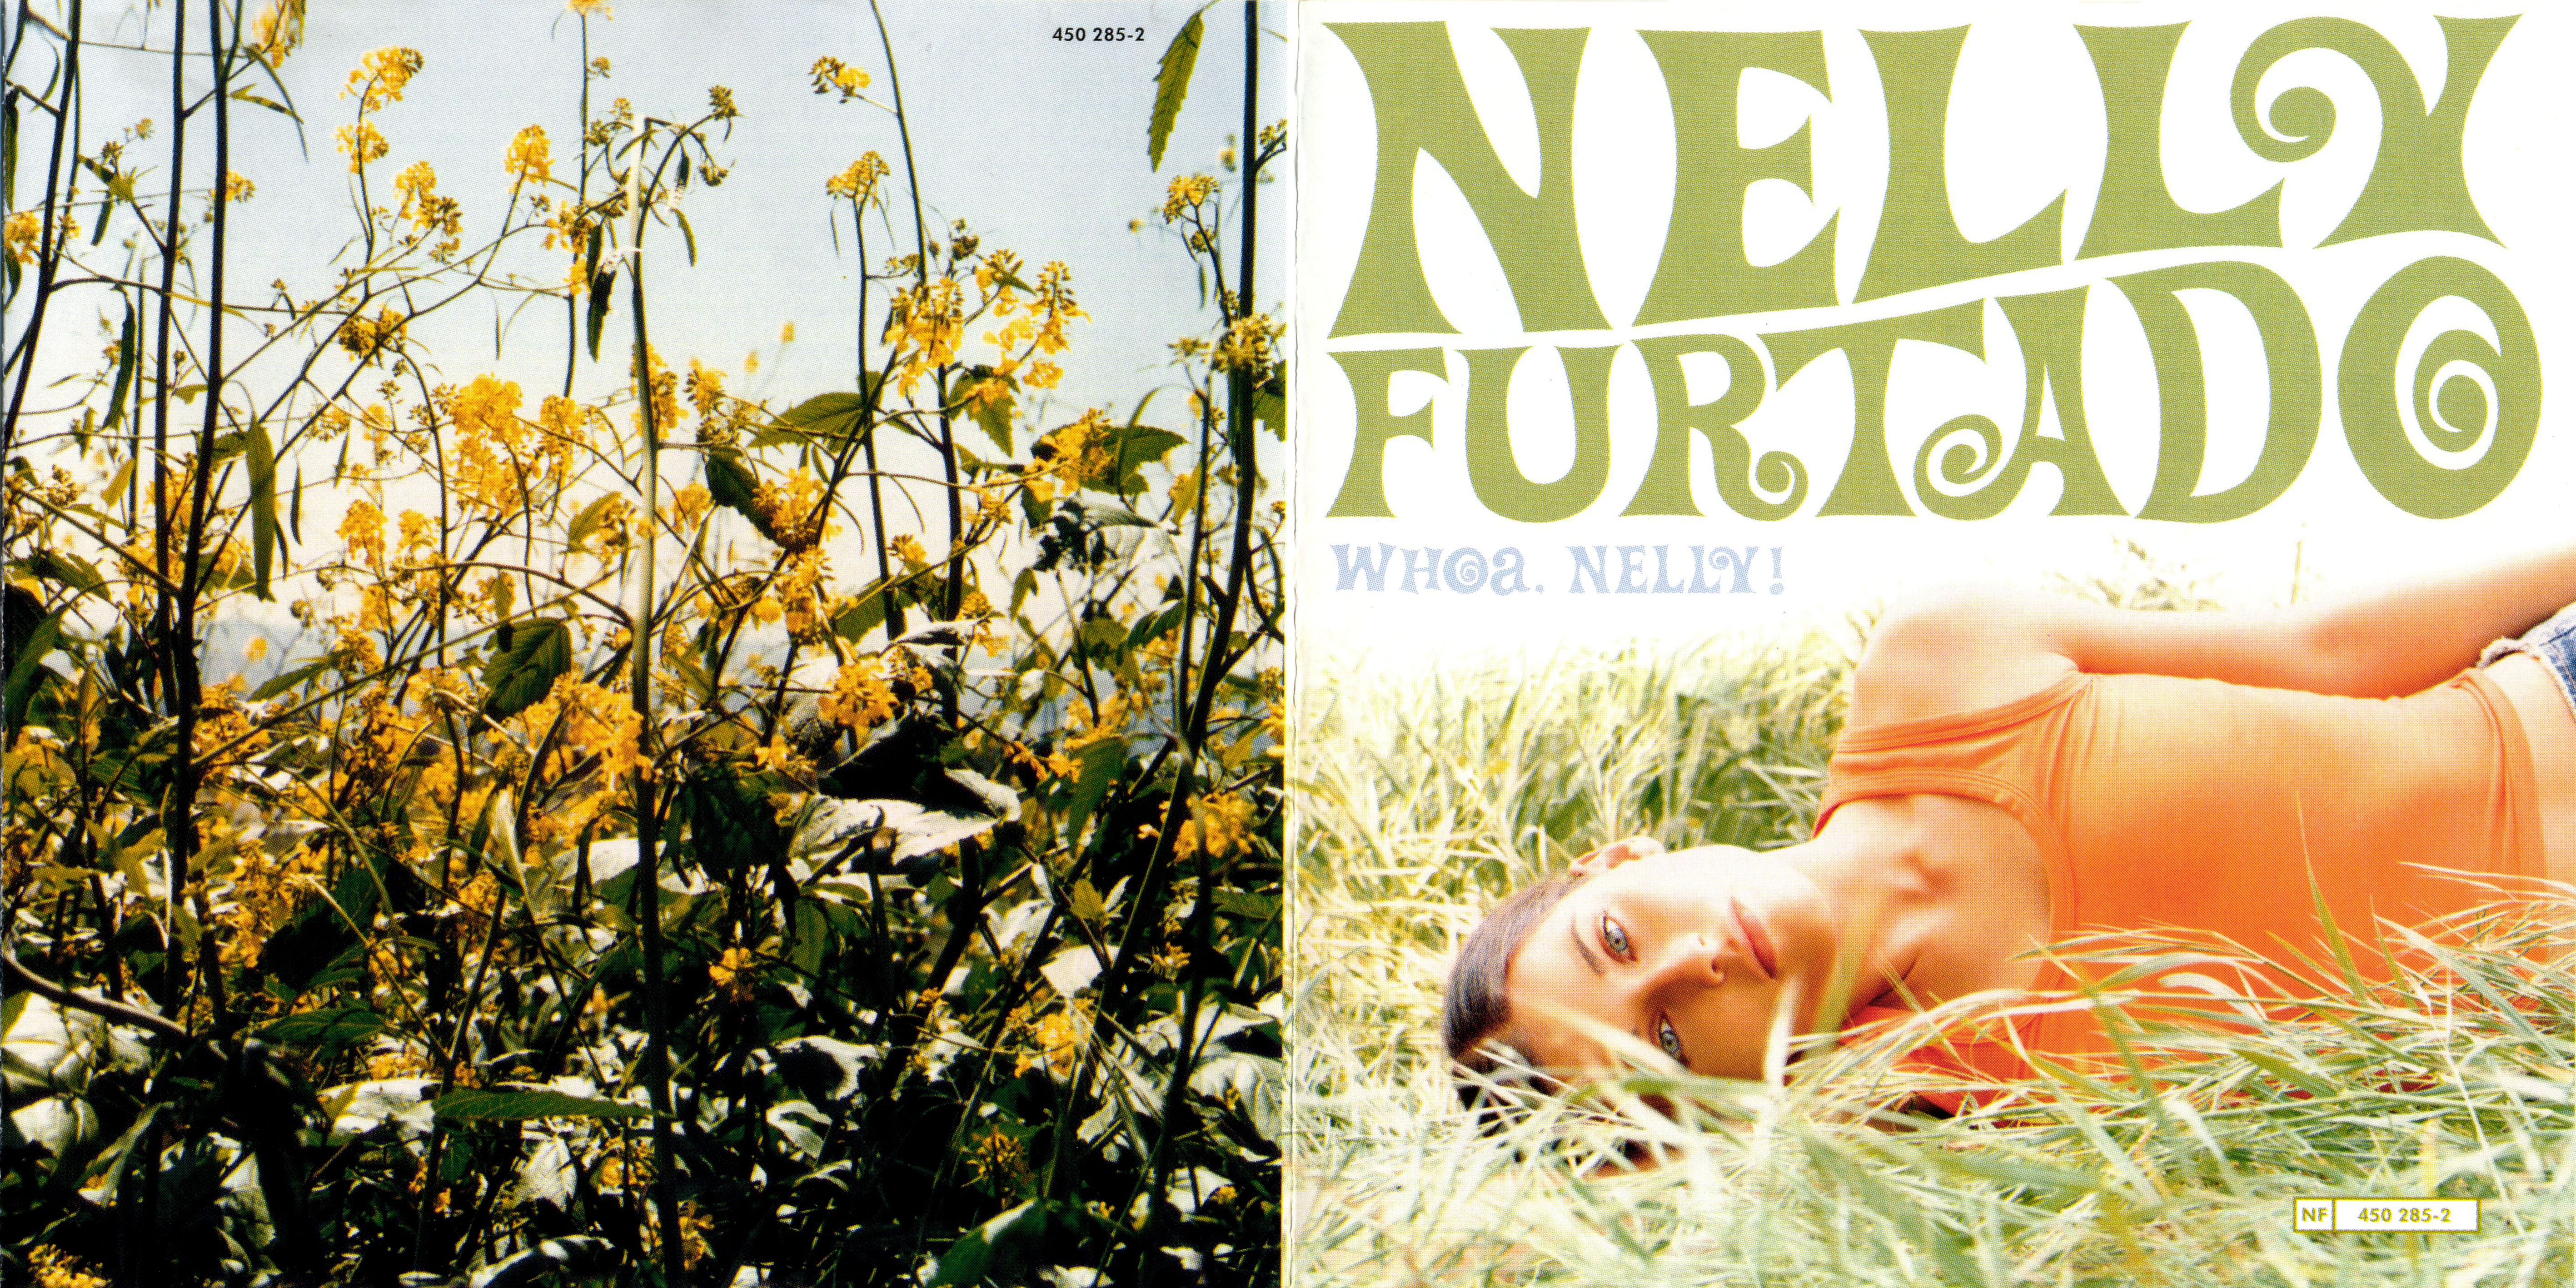 Nelly Furtado Whoa2C Nelly21 2813 Tracks29 booklet1.jpg.